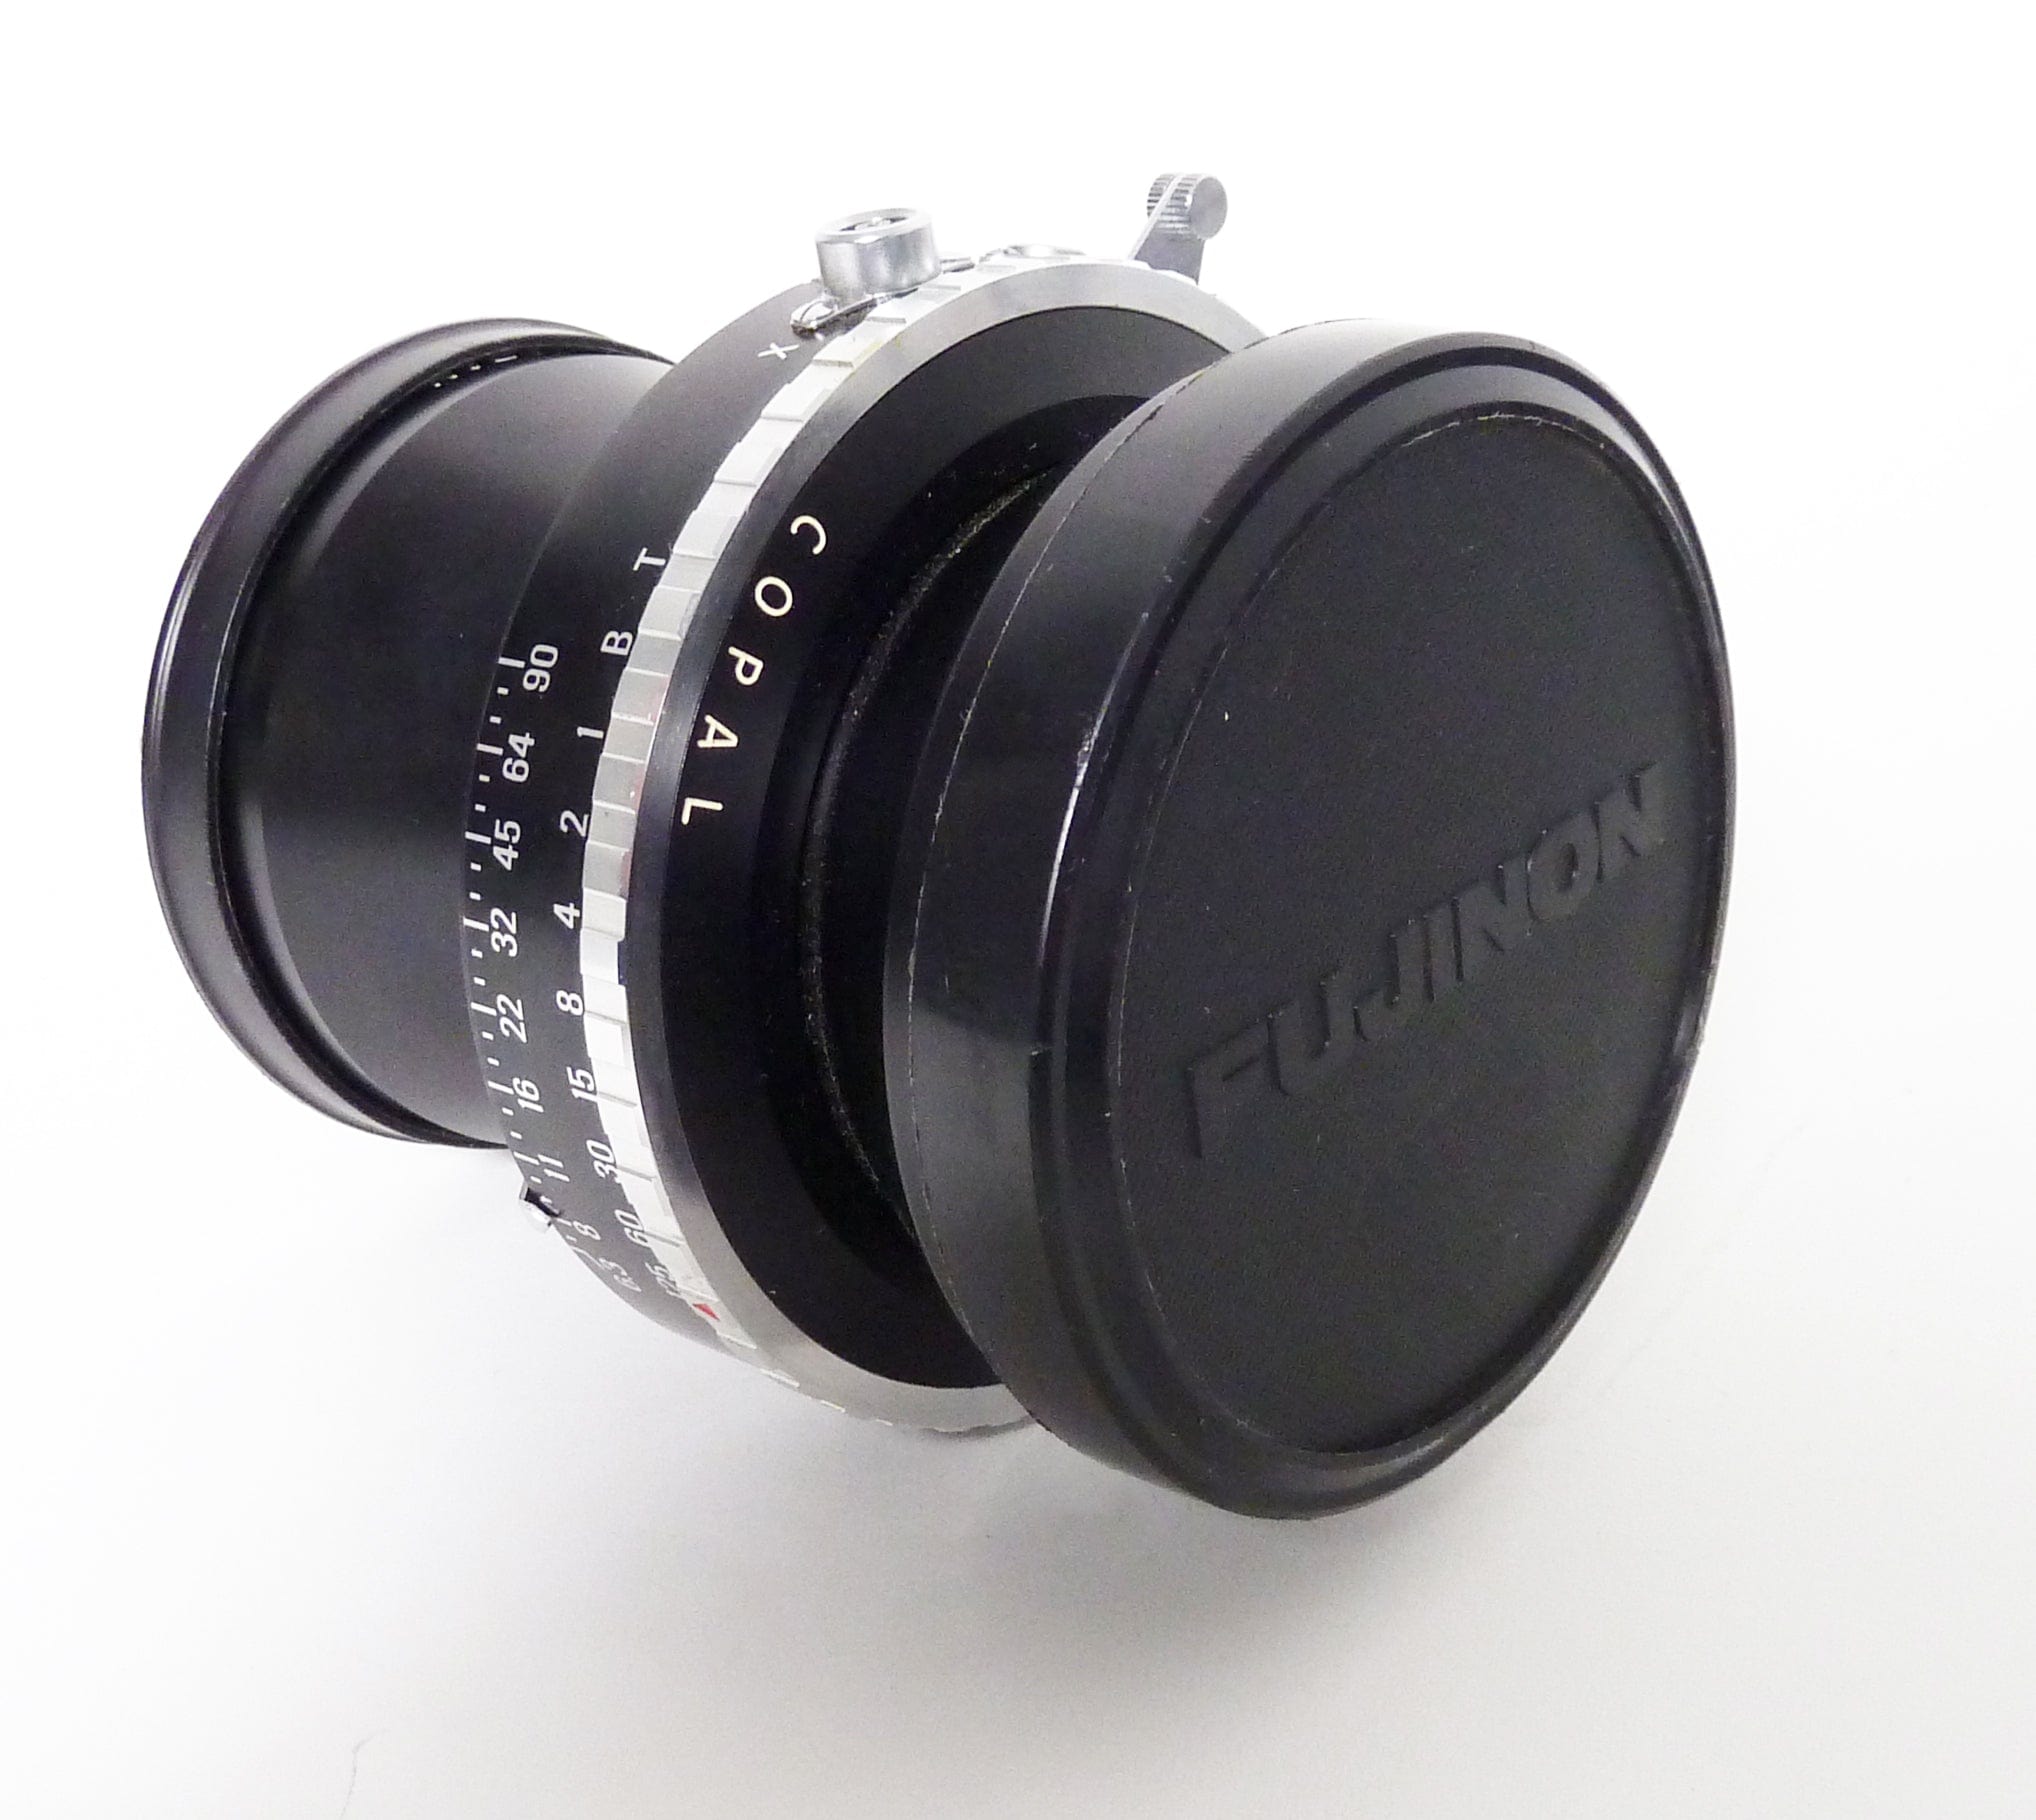 Fujinon- W 360mm F6.3 Large Format Lens